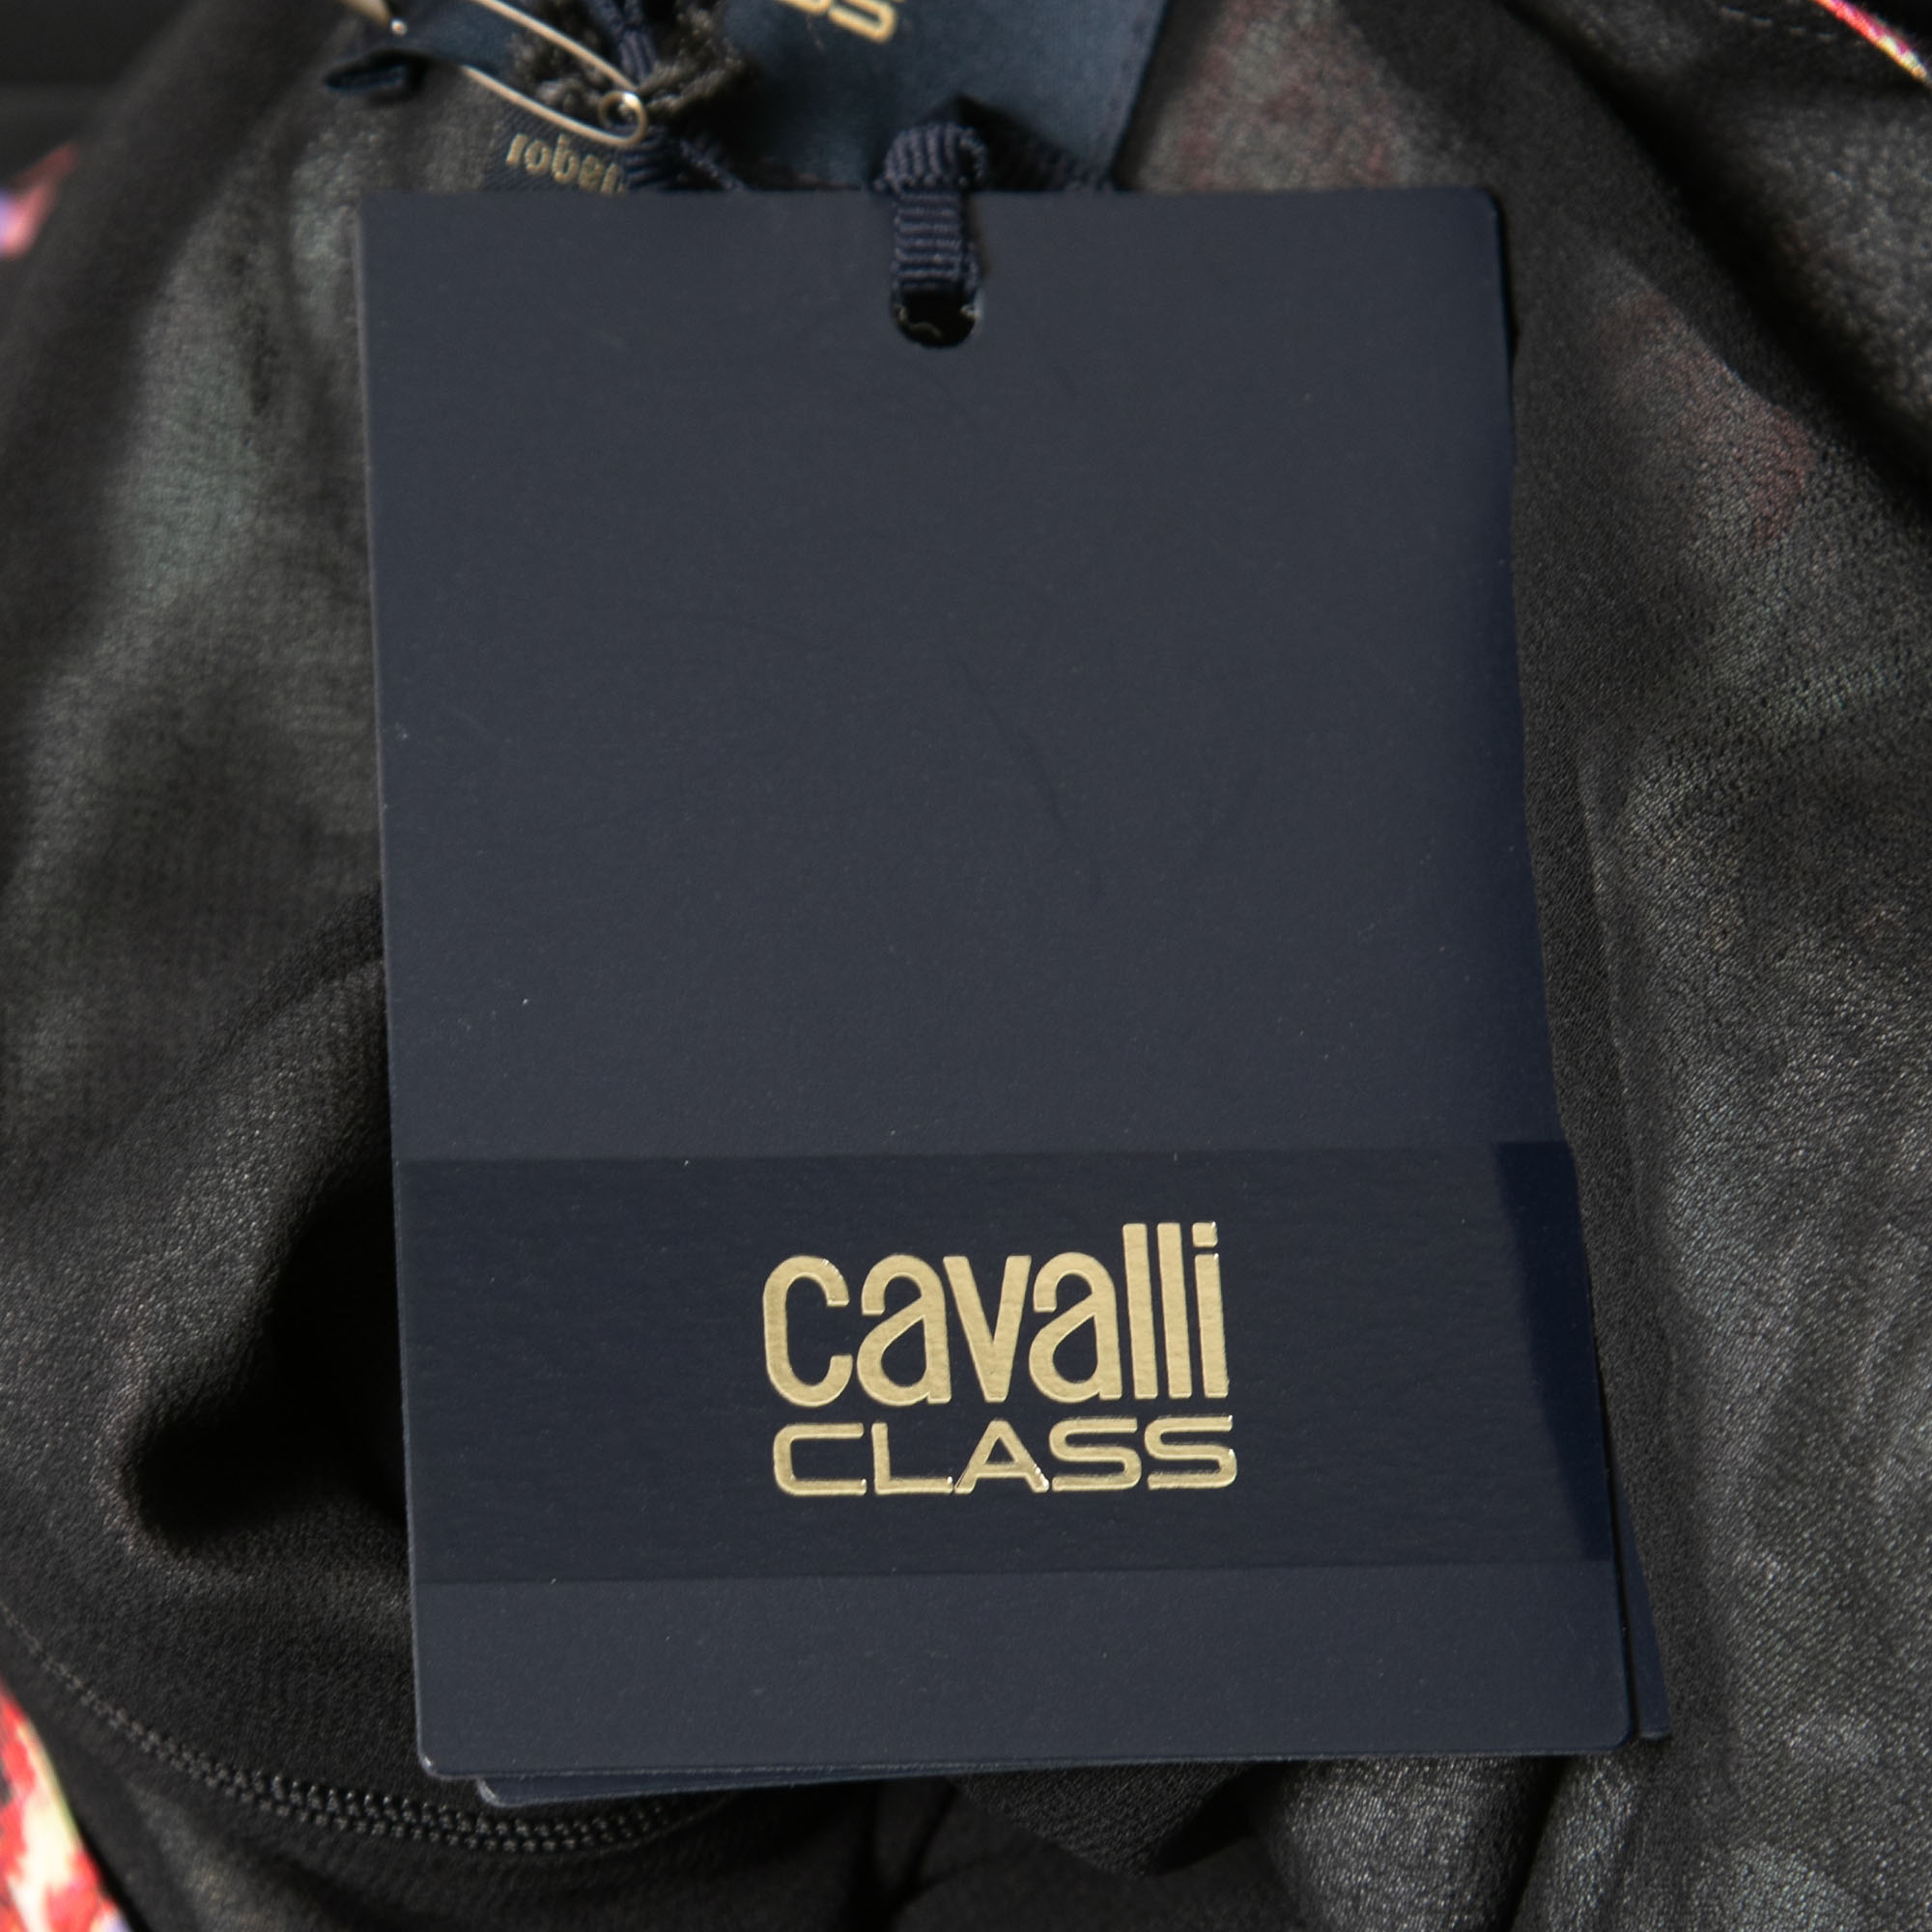 Cavalli Class Multicolor Floral Printed Satin Shift Dress M